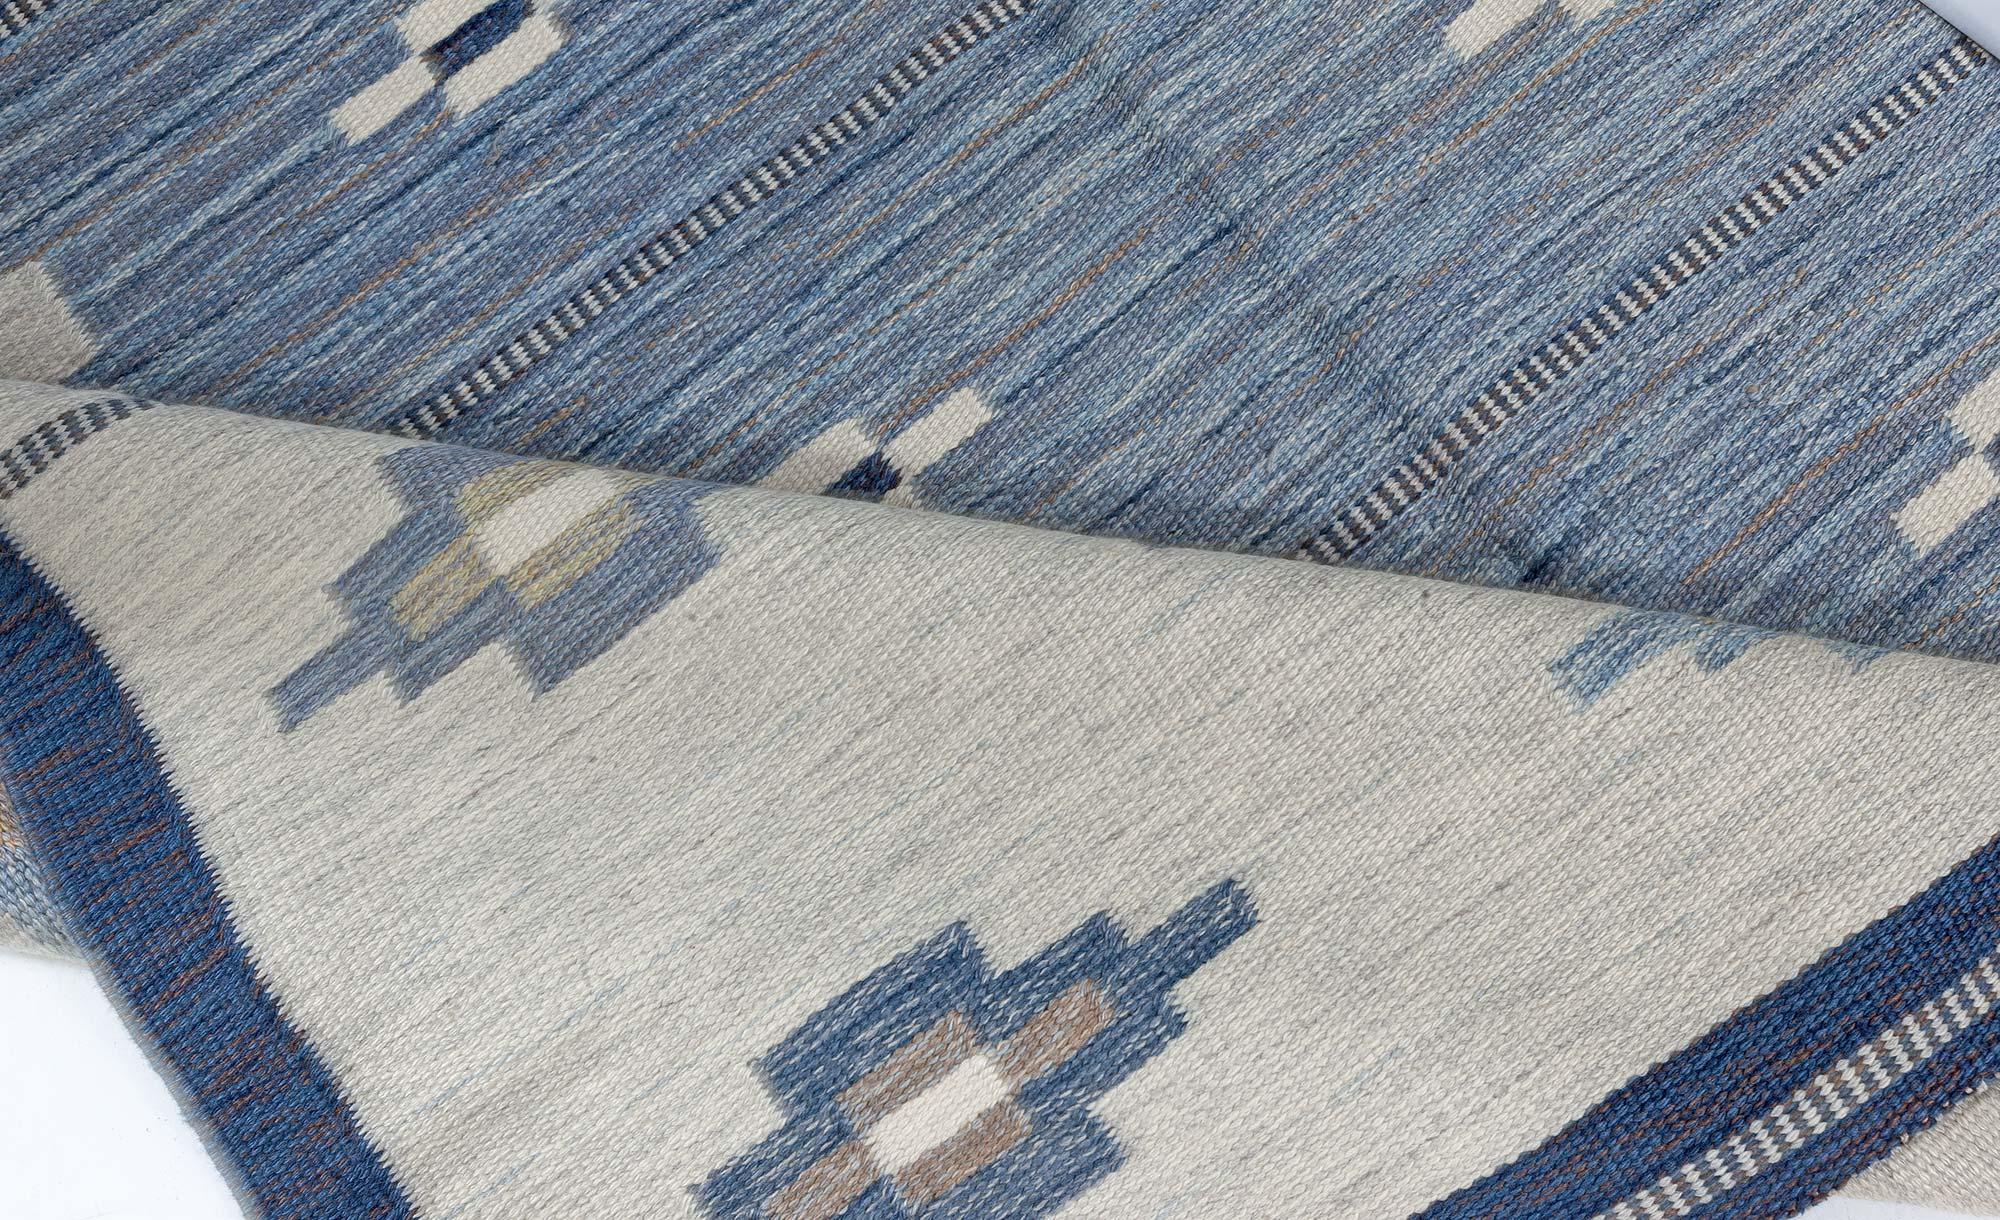 Vintage Swedish blue flat woven rug by Erik Lundberg
Size: 6'5